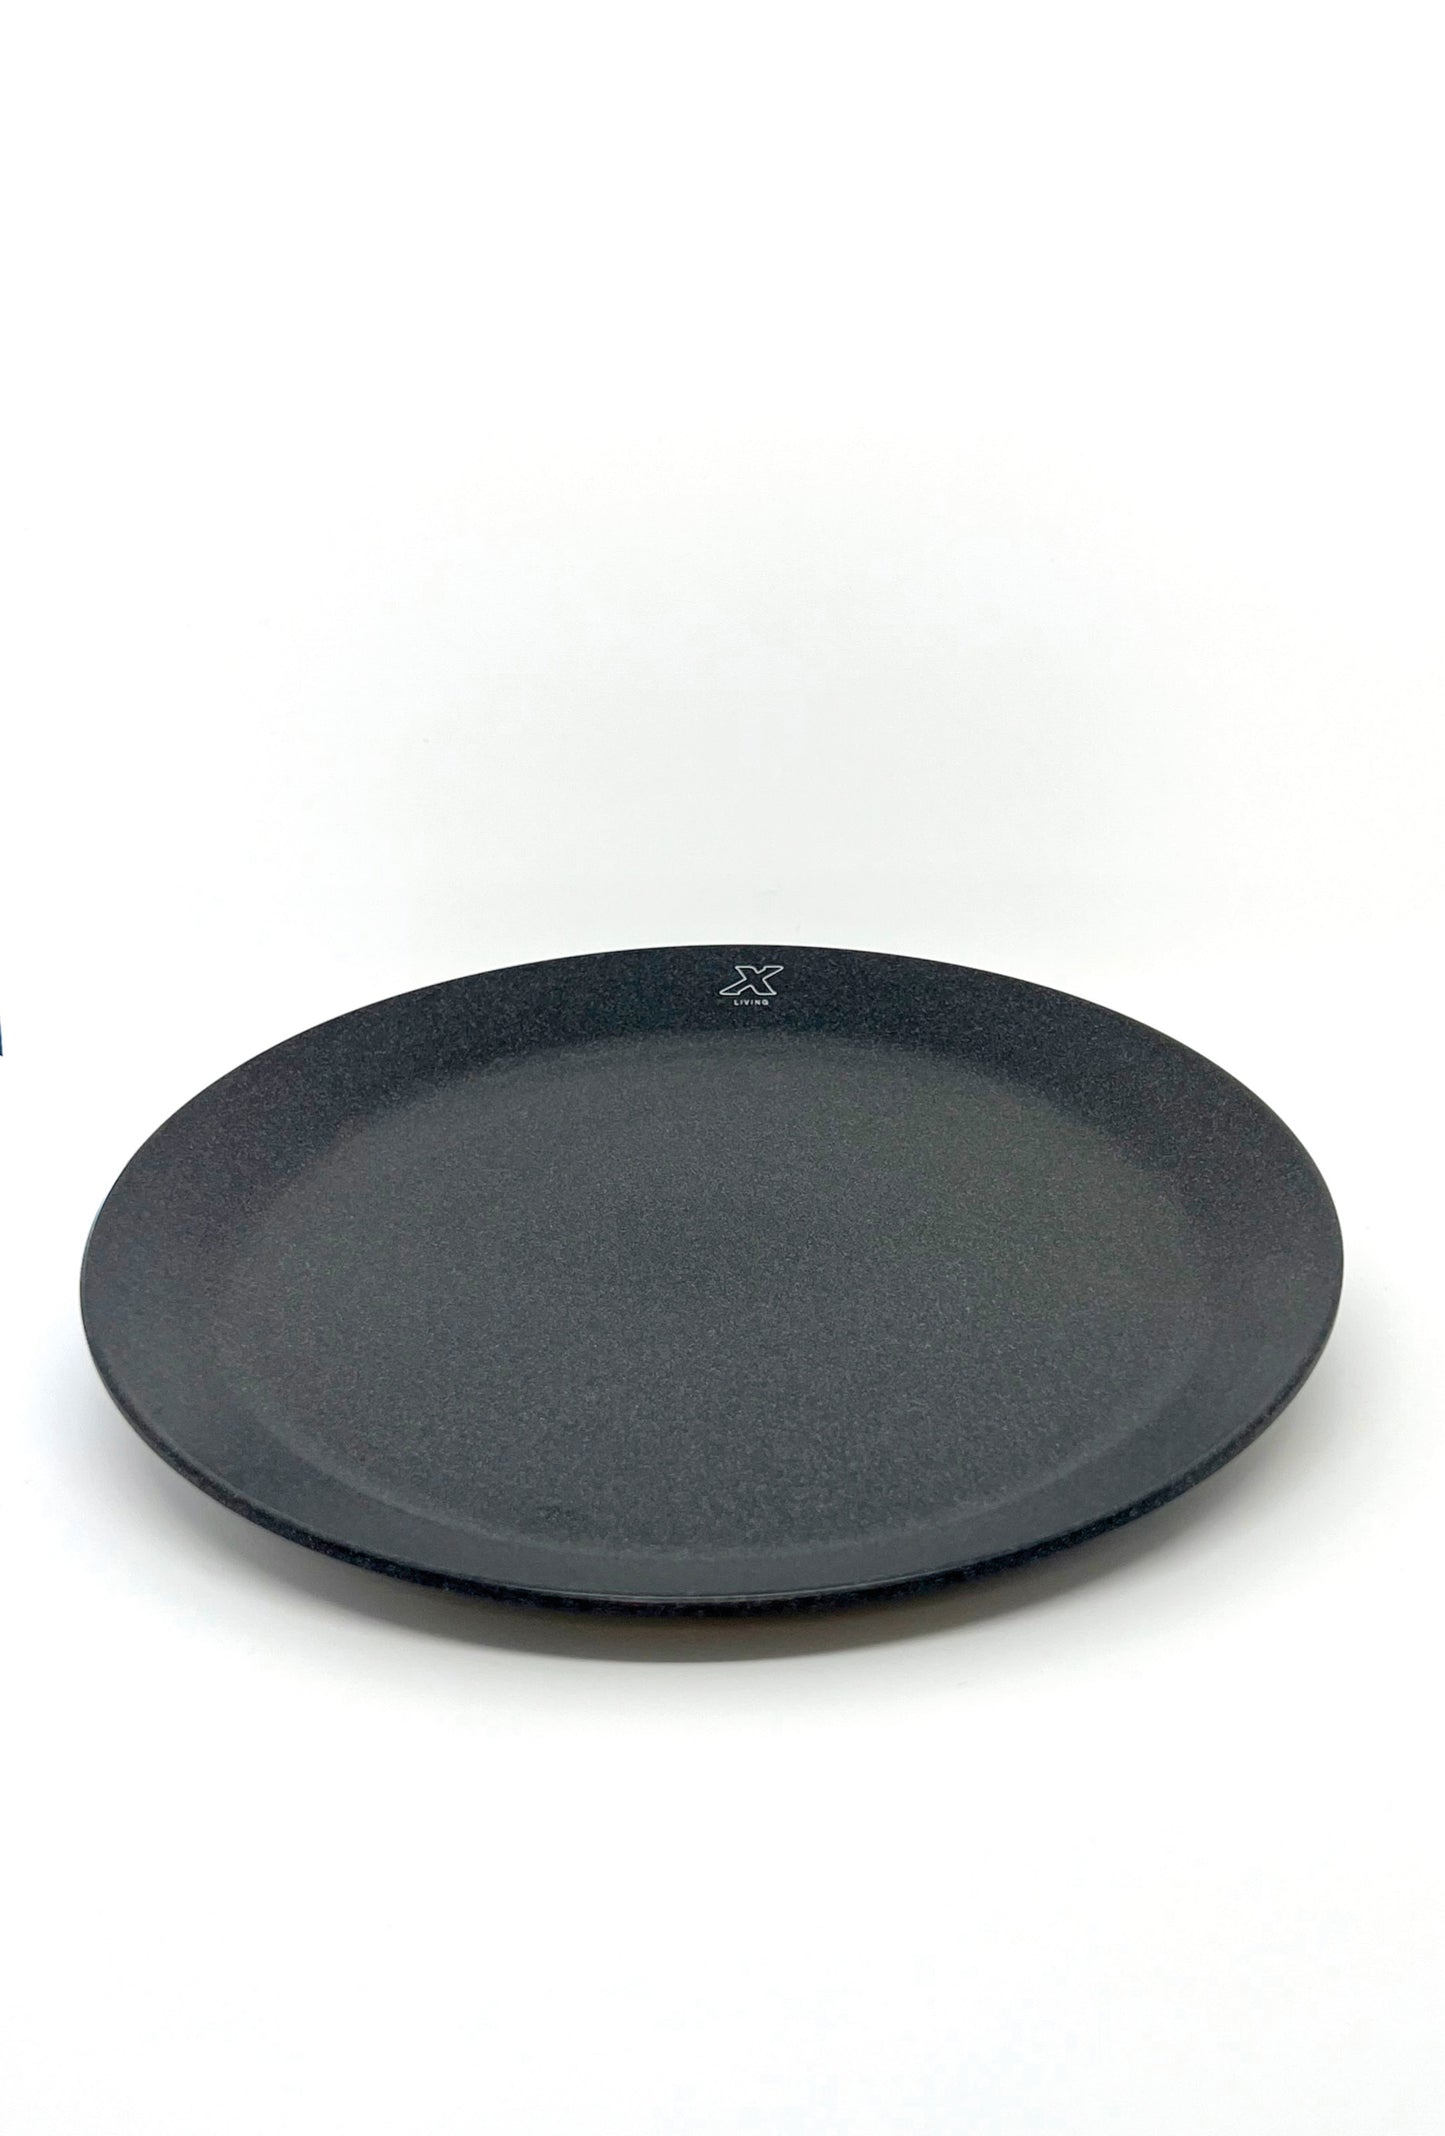 Dinner plate - Pebble black (280 mm.)